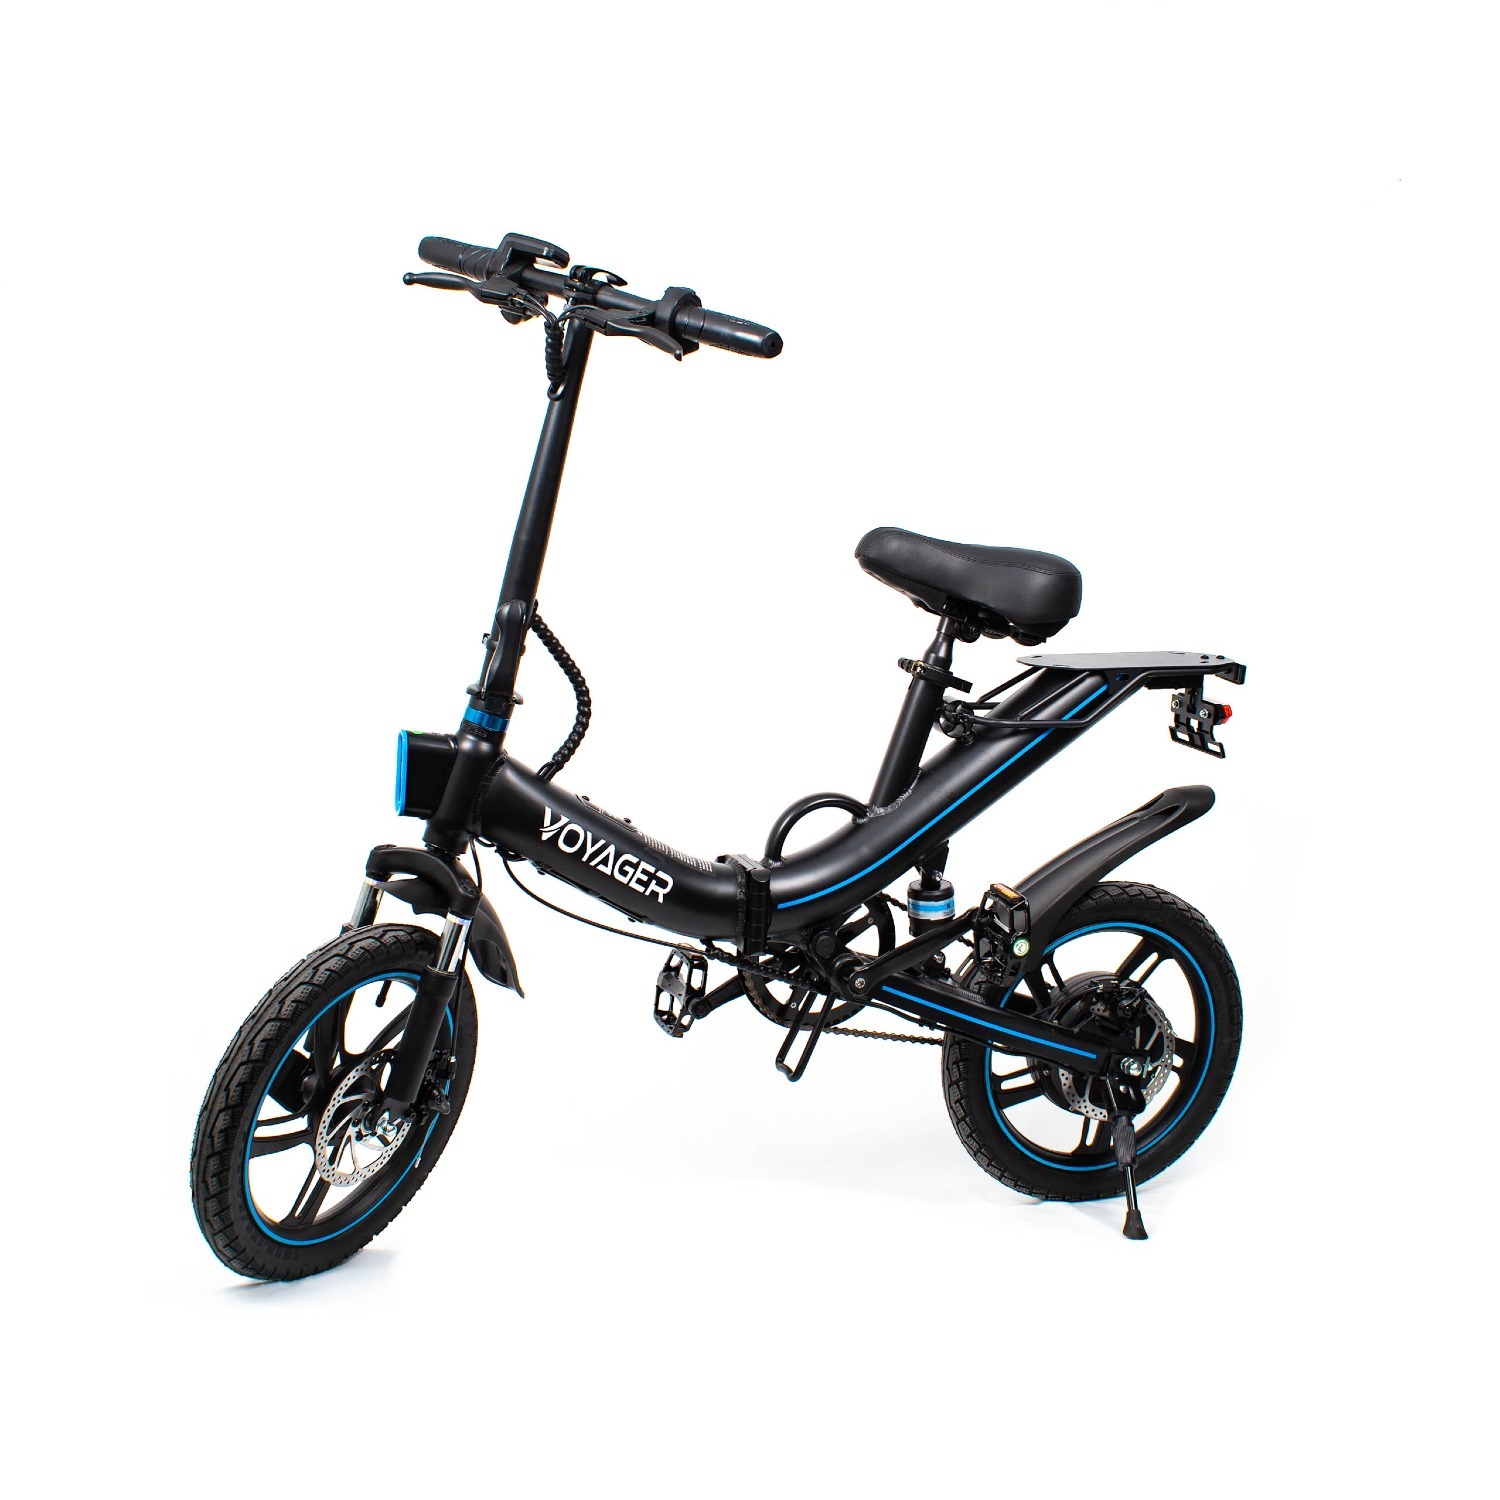 Voyager Radius Pro V2 Foldable Electric Bike w/ 450W Motor & Dual Disc Brakes (Blue) $429 + Free Shipping